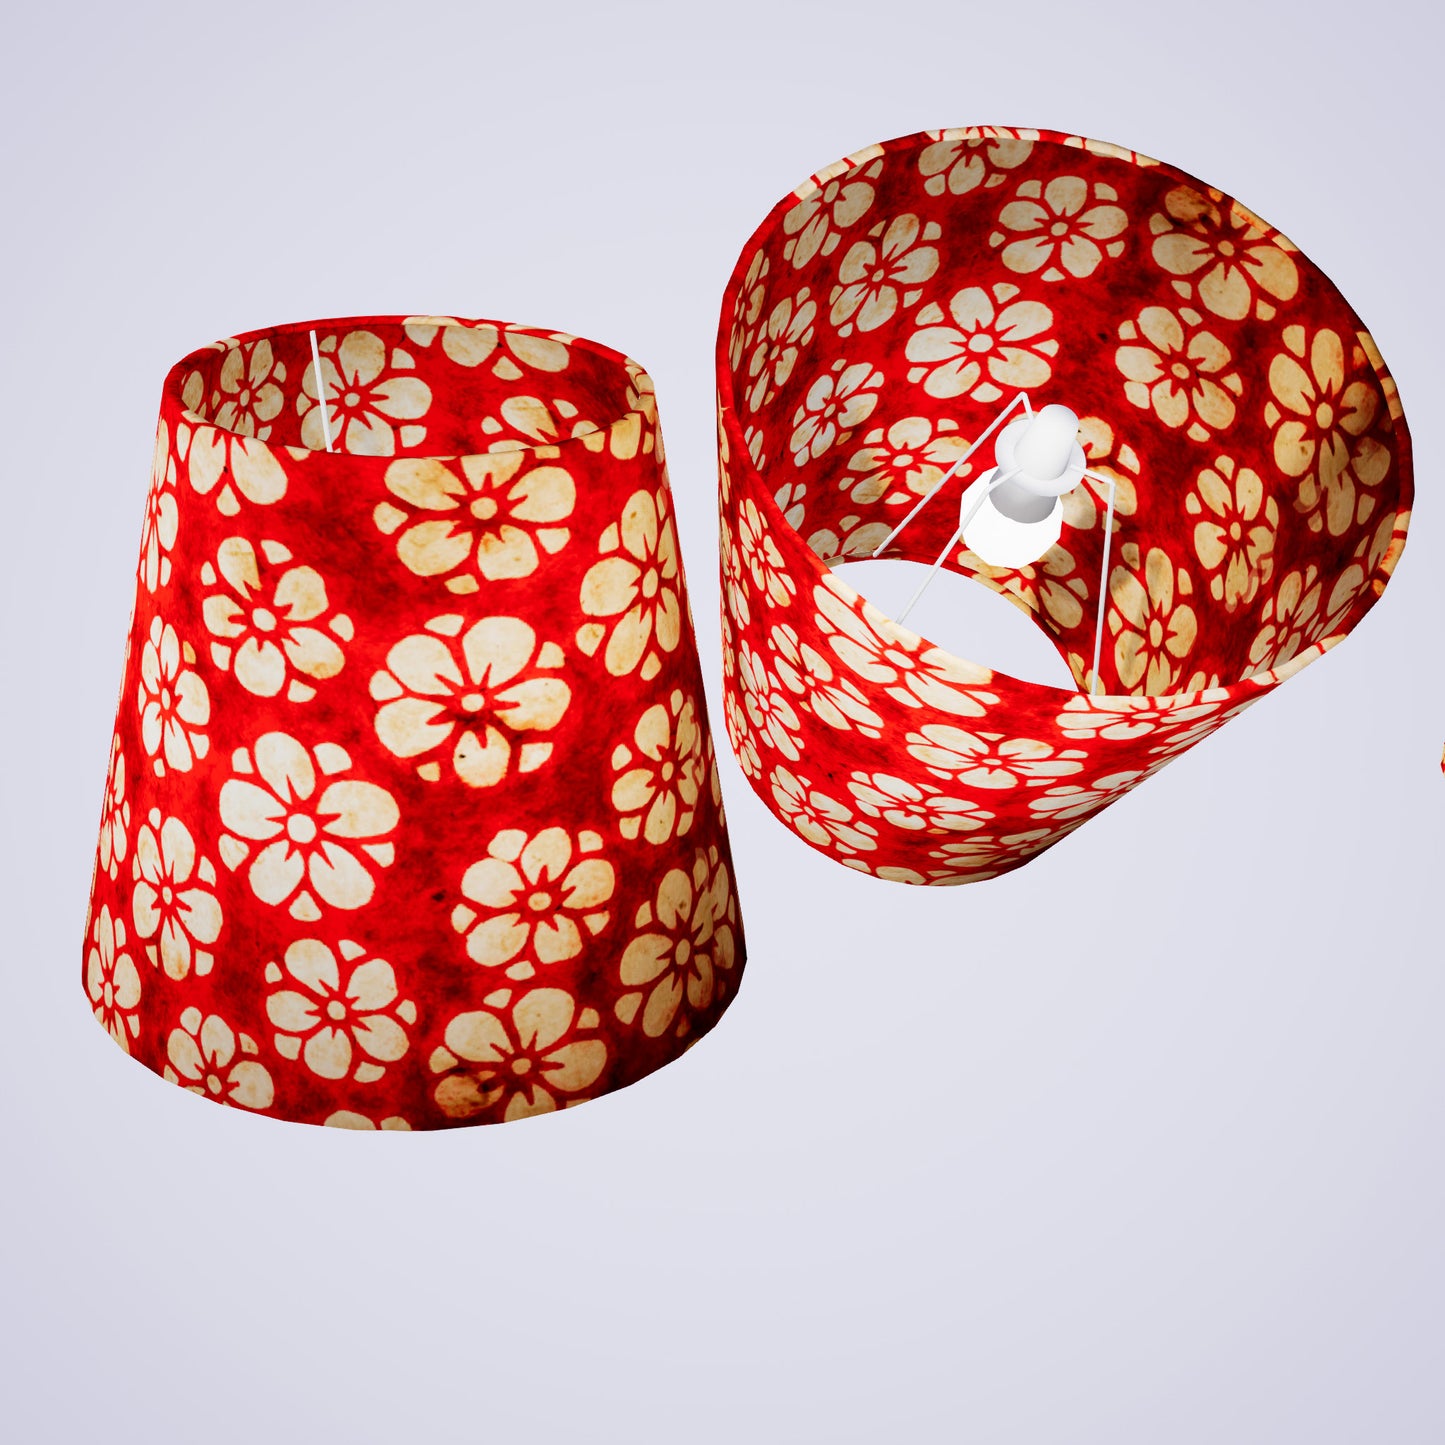 Conical Lamp Shade P76 - Batik Star Flower Red, 23cm(top) x 35cm(bottom) x 31cm(height)